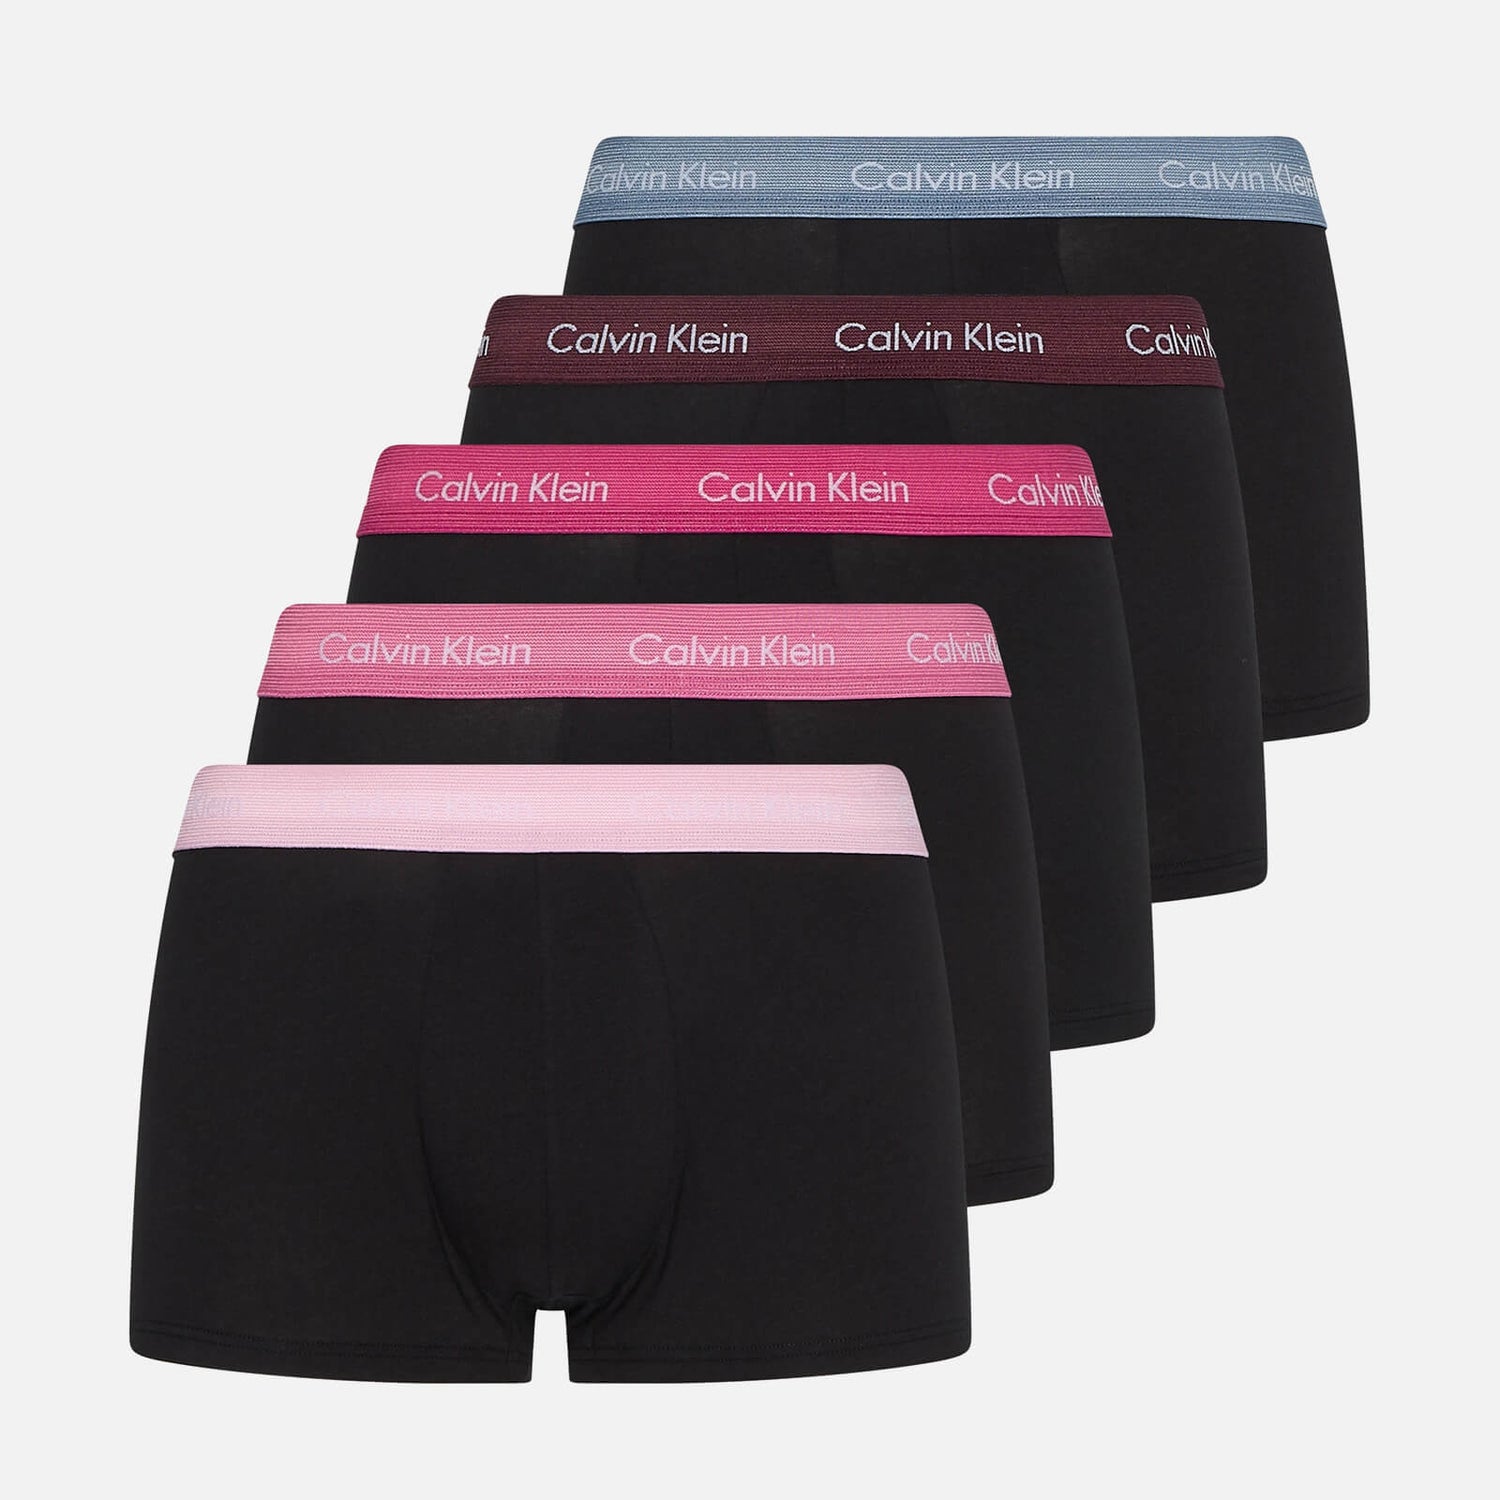 Calvin Klein Men's 5 Pack Low Rise Trunk Boxer Shorts - Black/Multi